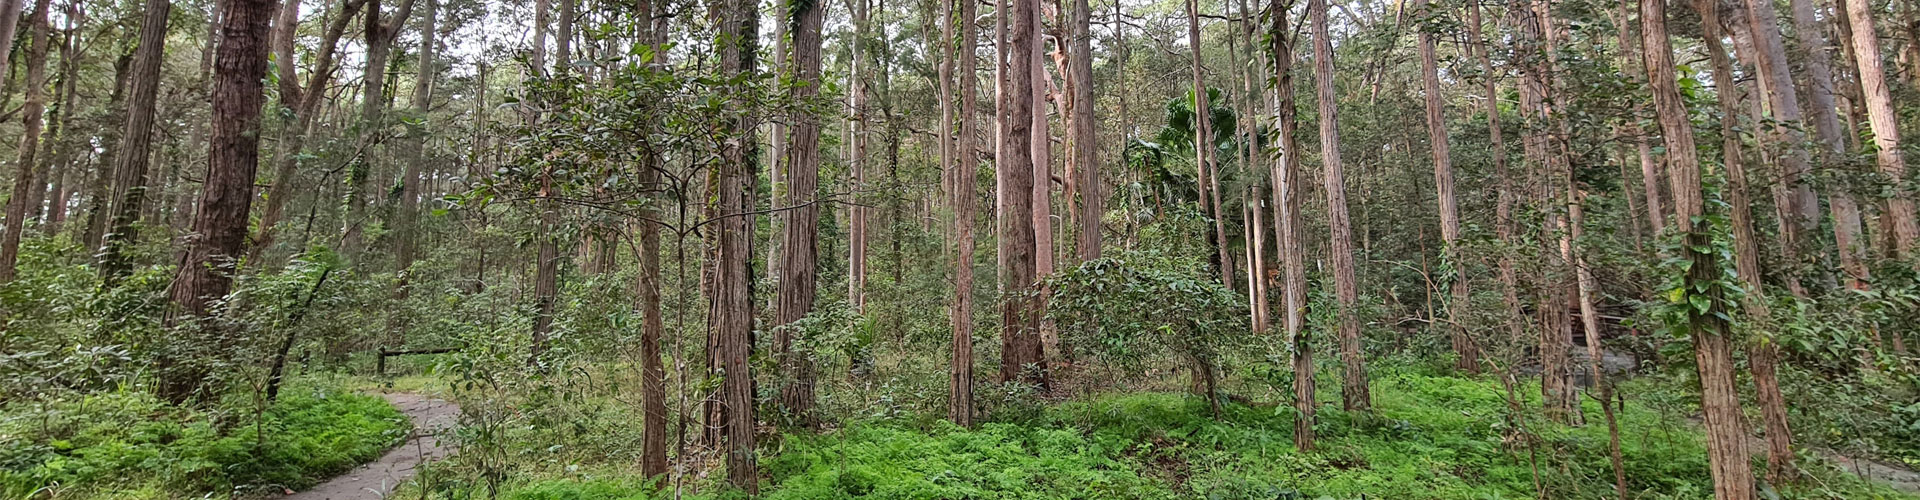 sydney-turpentine-ironbark-forest-carrs-bush-1920px.jpg